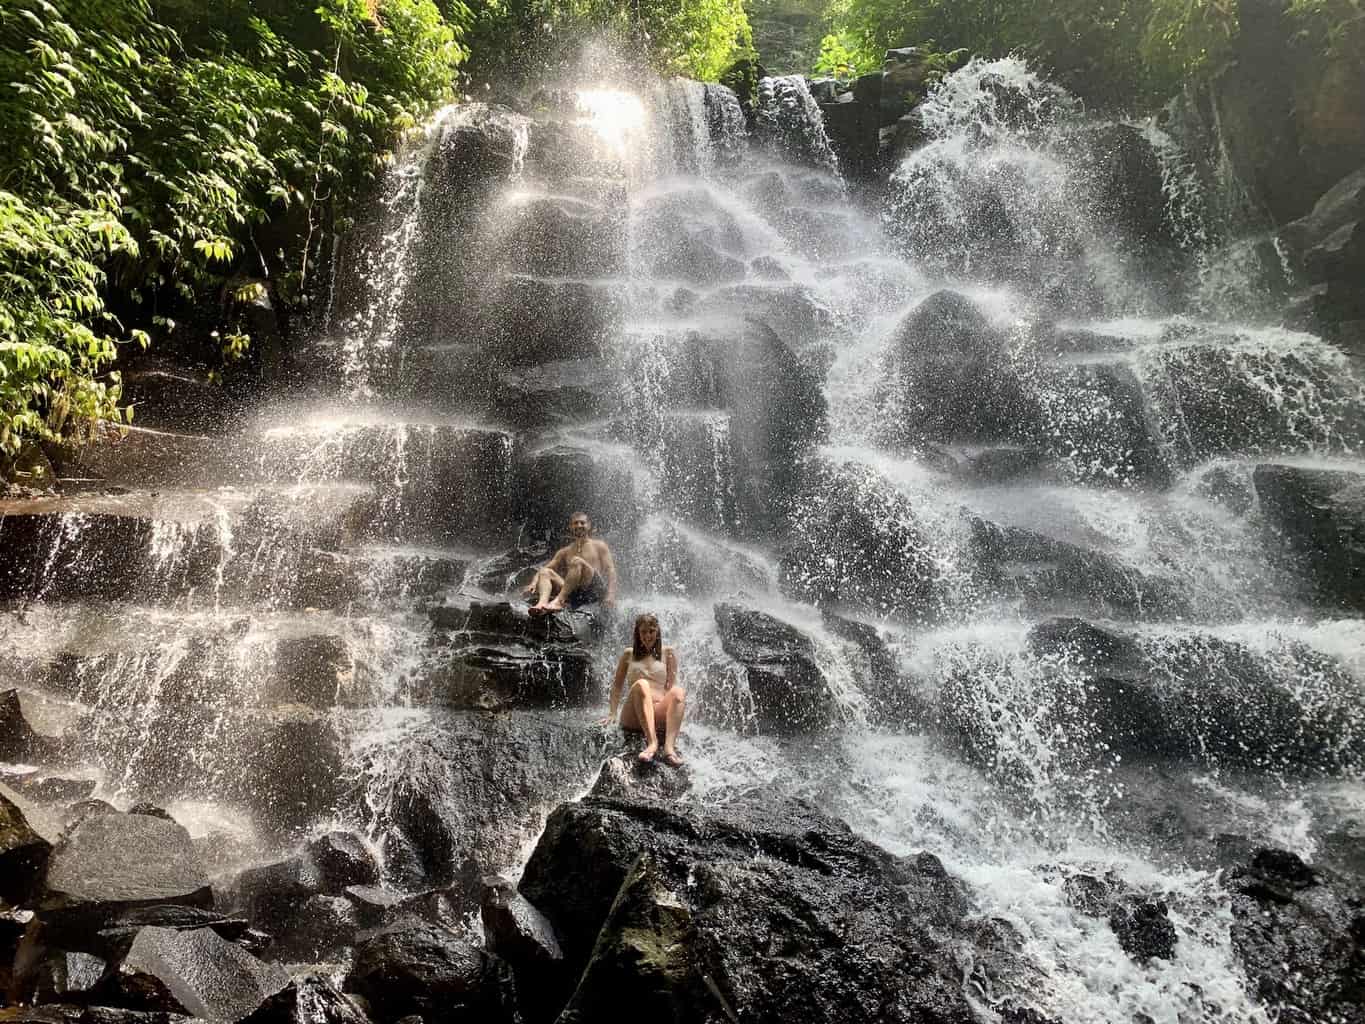 The Kanto Lampo Waterfall of Bali, Indonesia